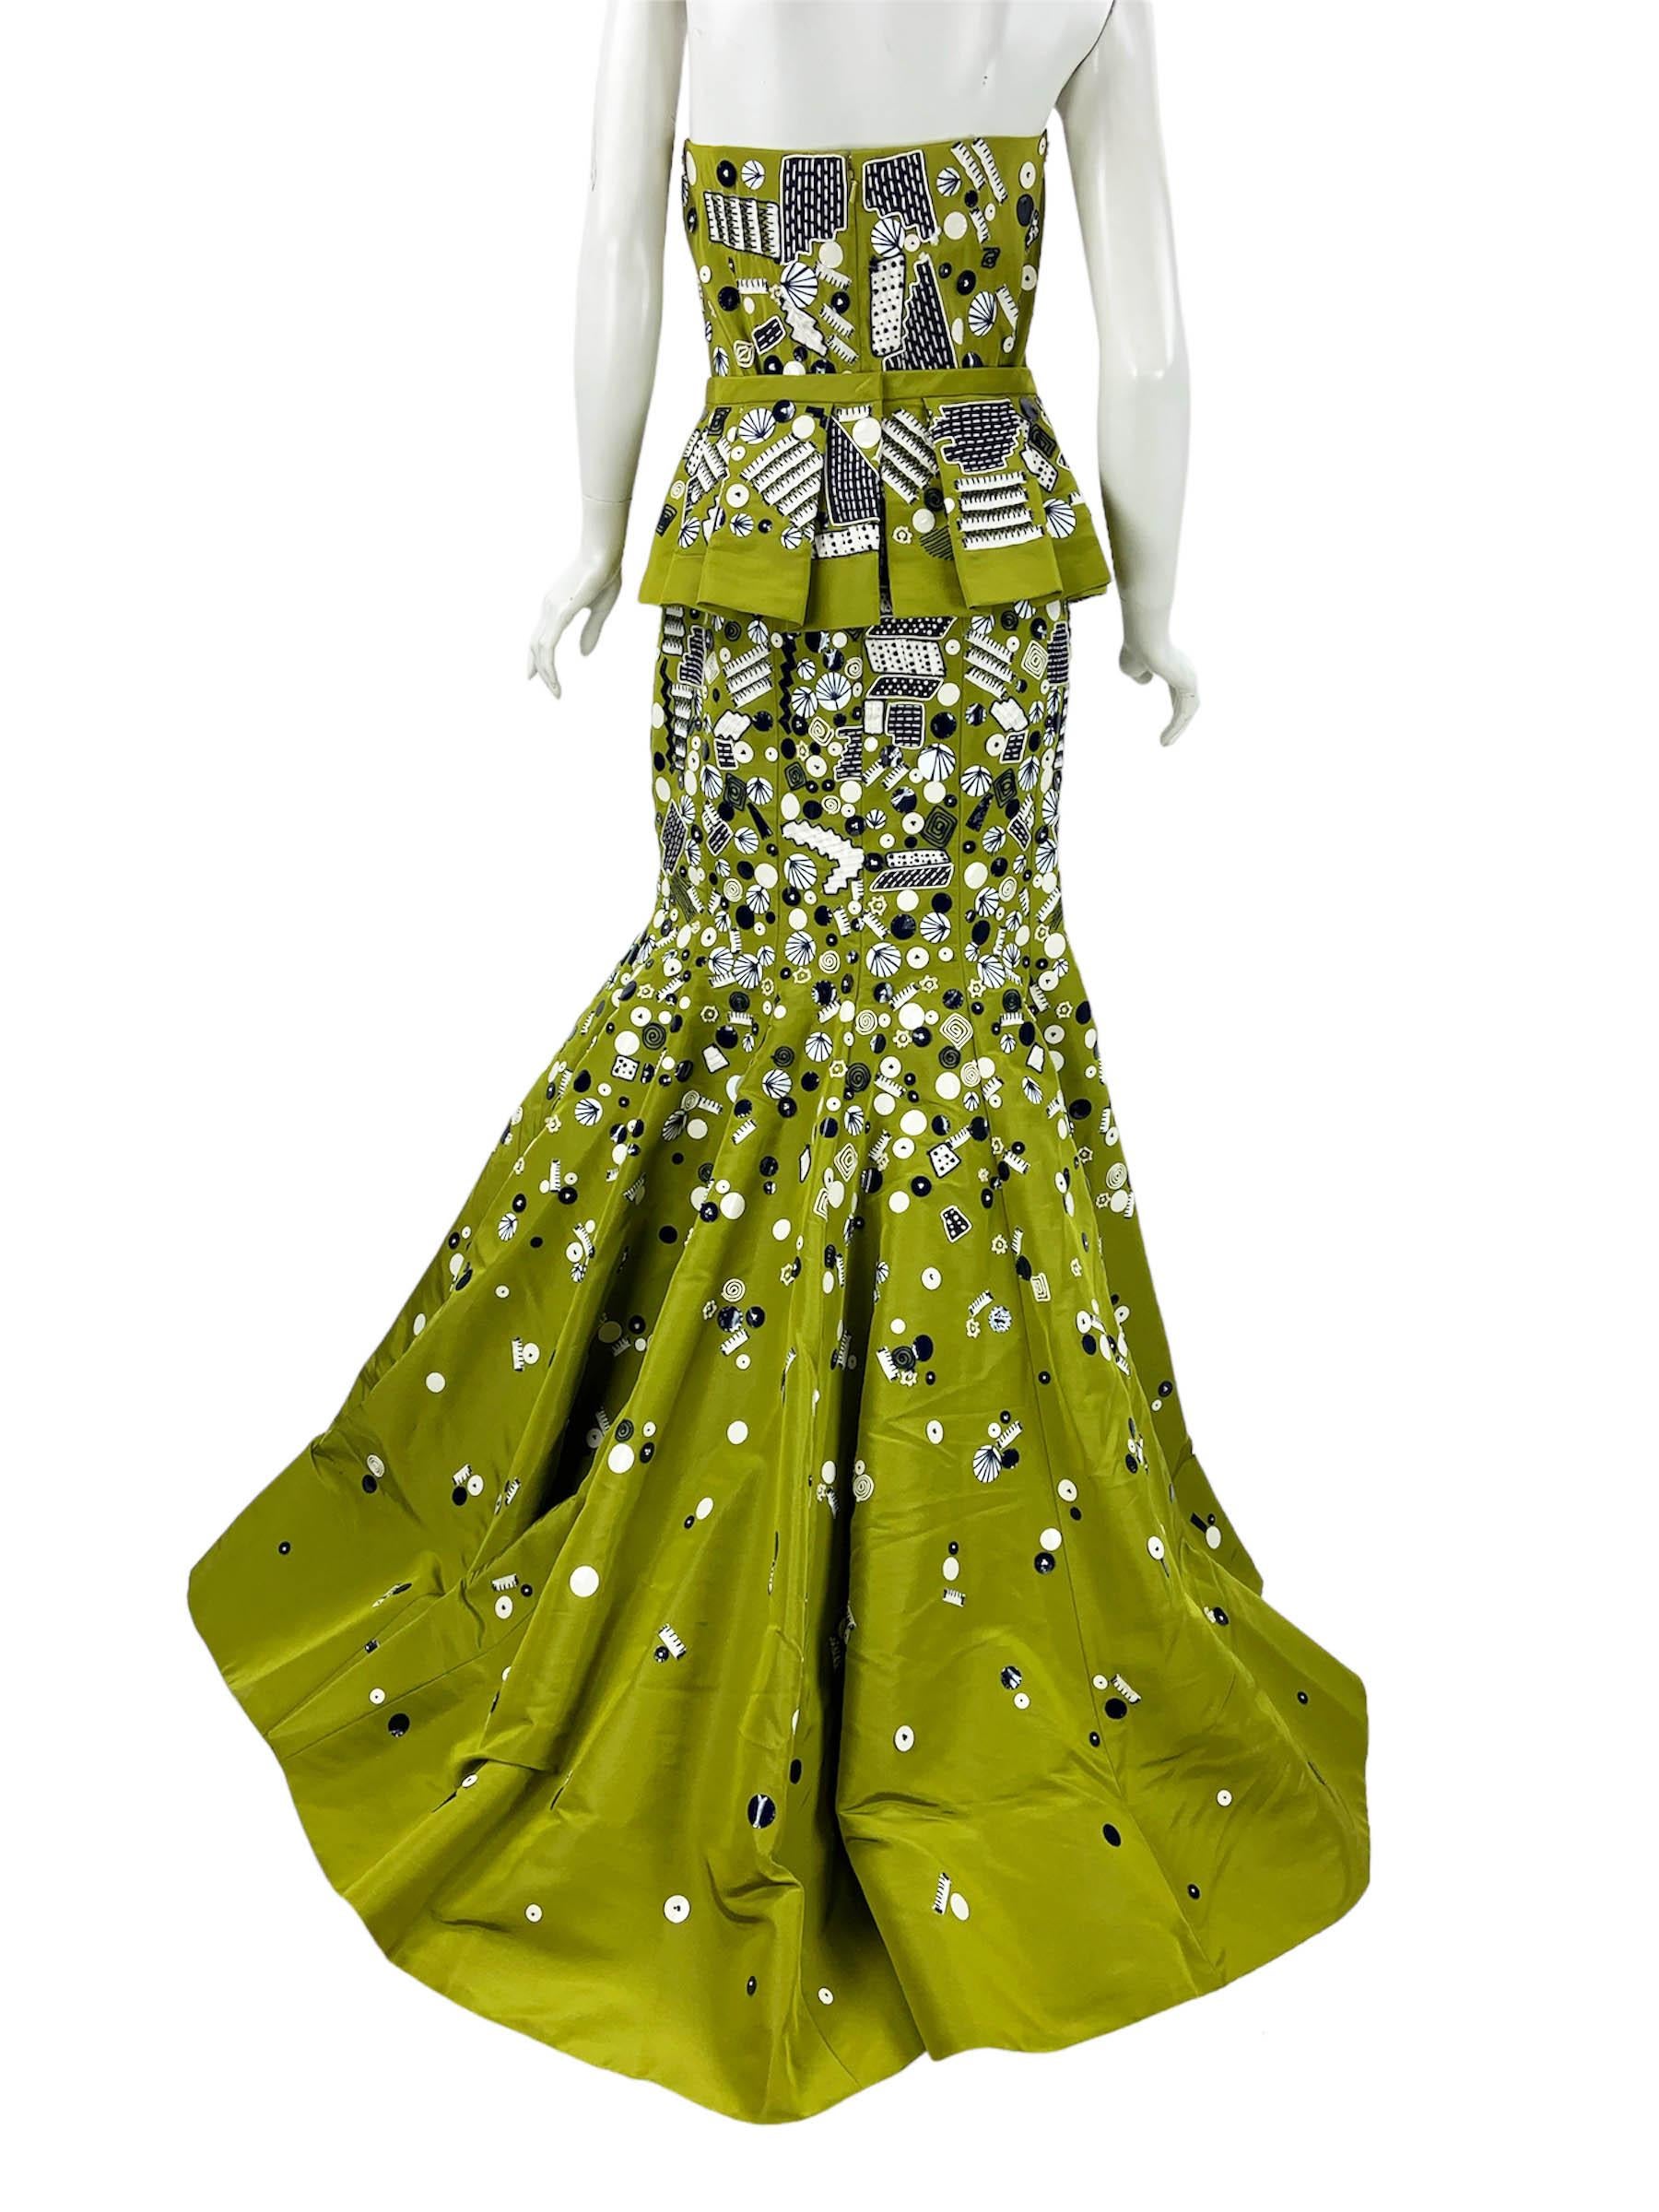 NWT Oscar de la Renta S/S 2009 Green Embellished Silk Taffeta Peplum Dress US 10 For Sale 5